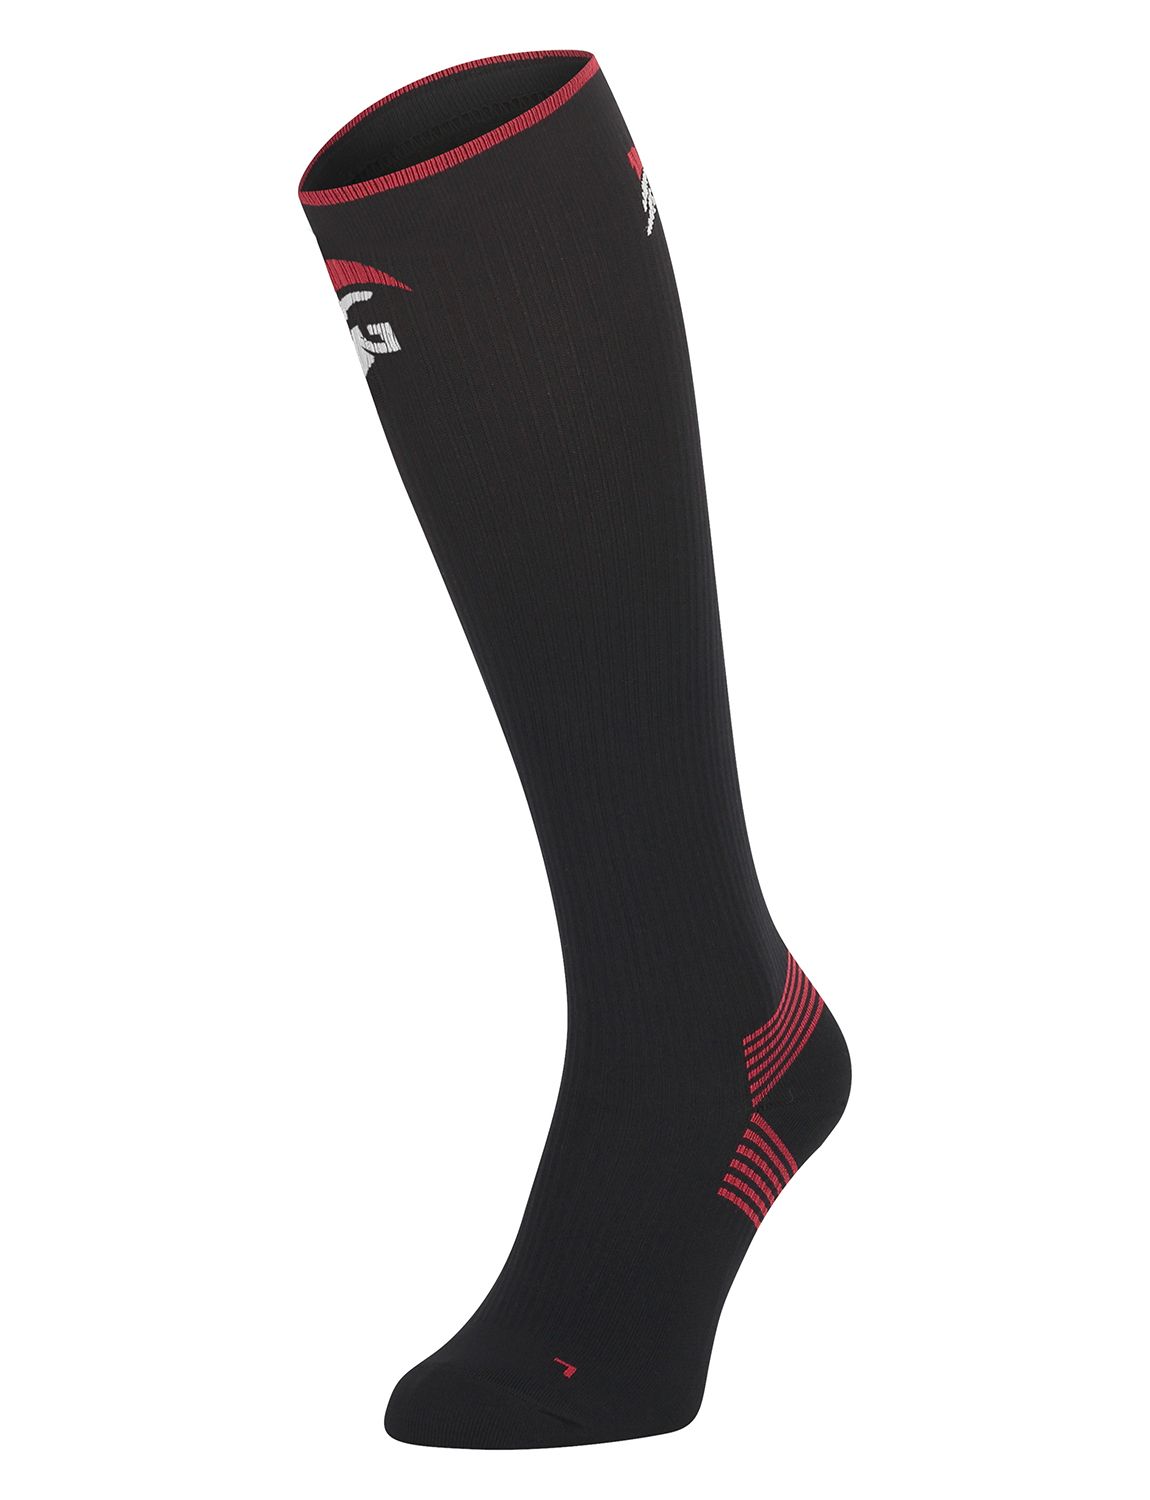 gladiator sports premium compression stockings for sale